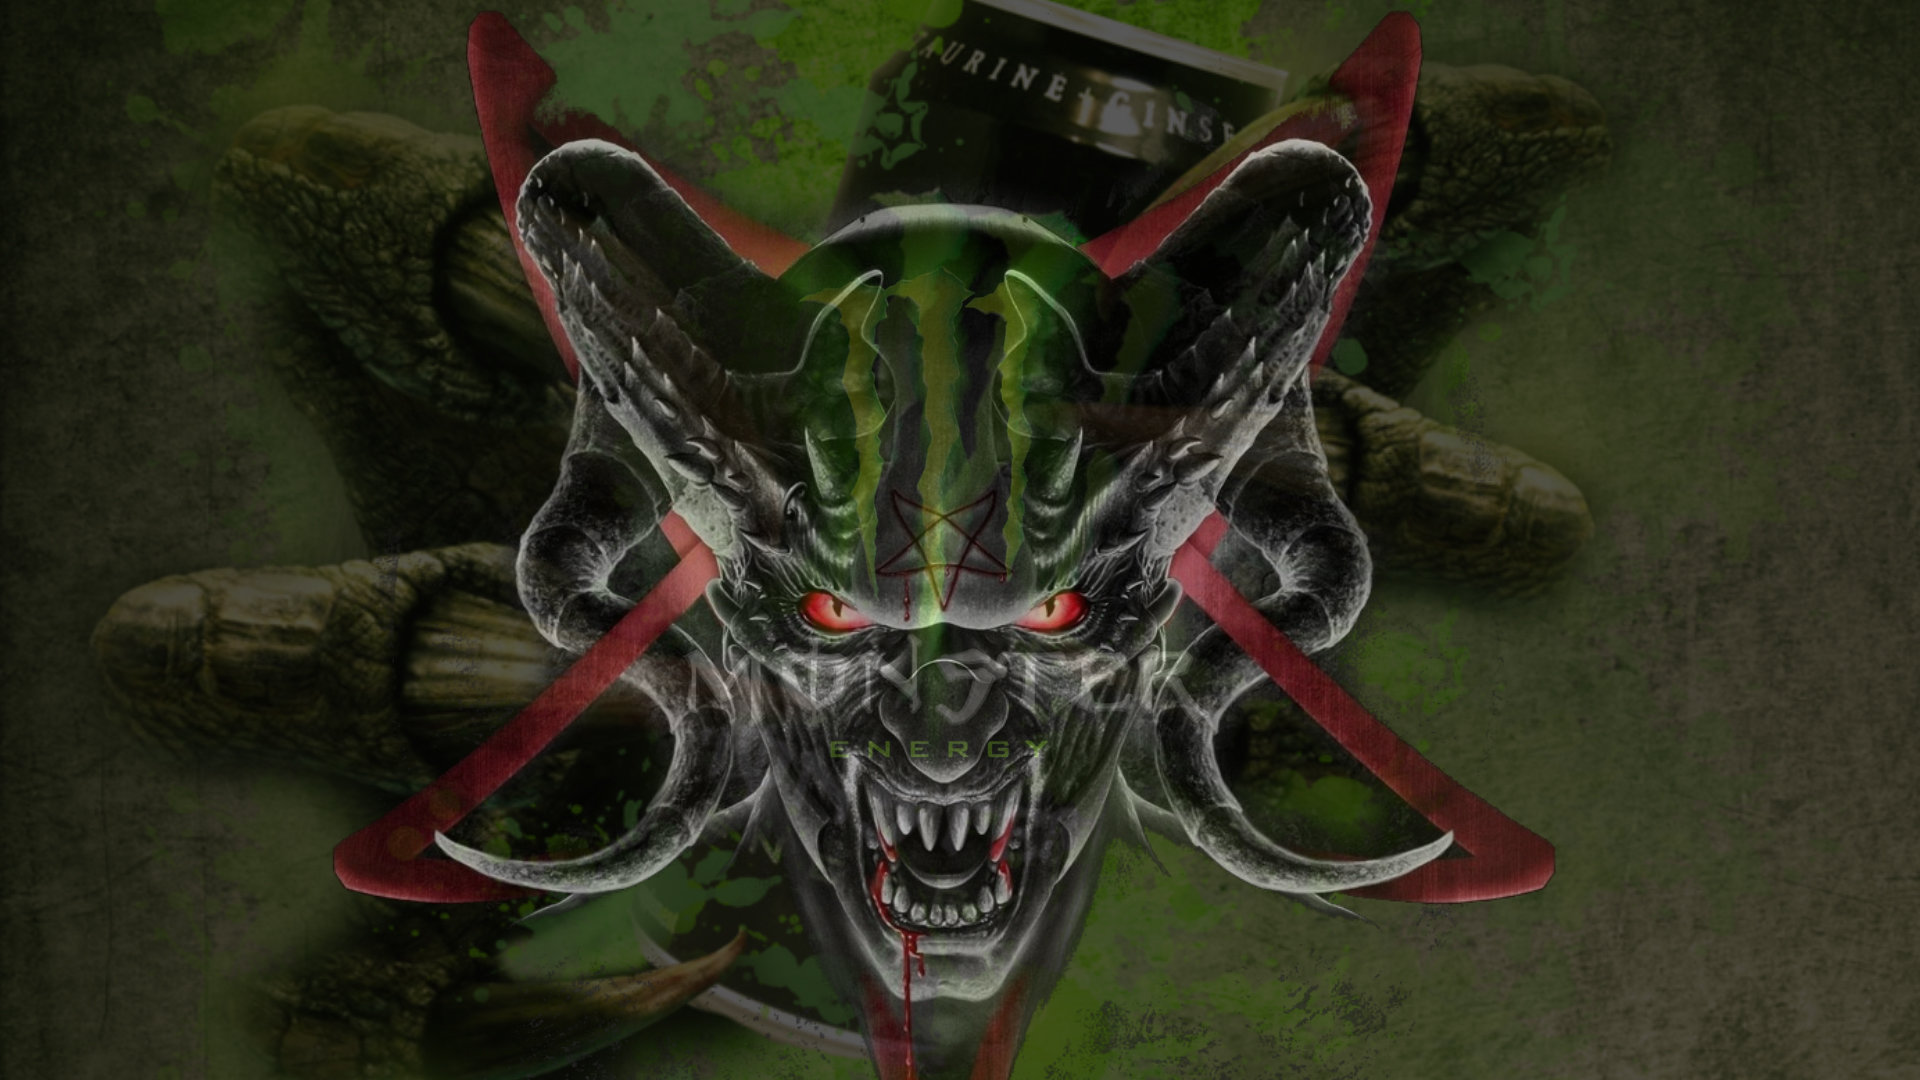 Free download Monster Energy wallpaper ID:254274 1080p for desktop